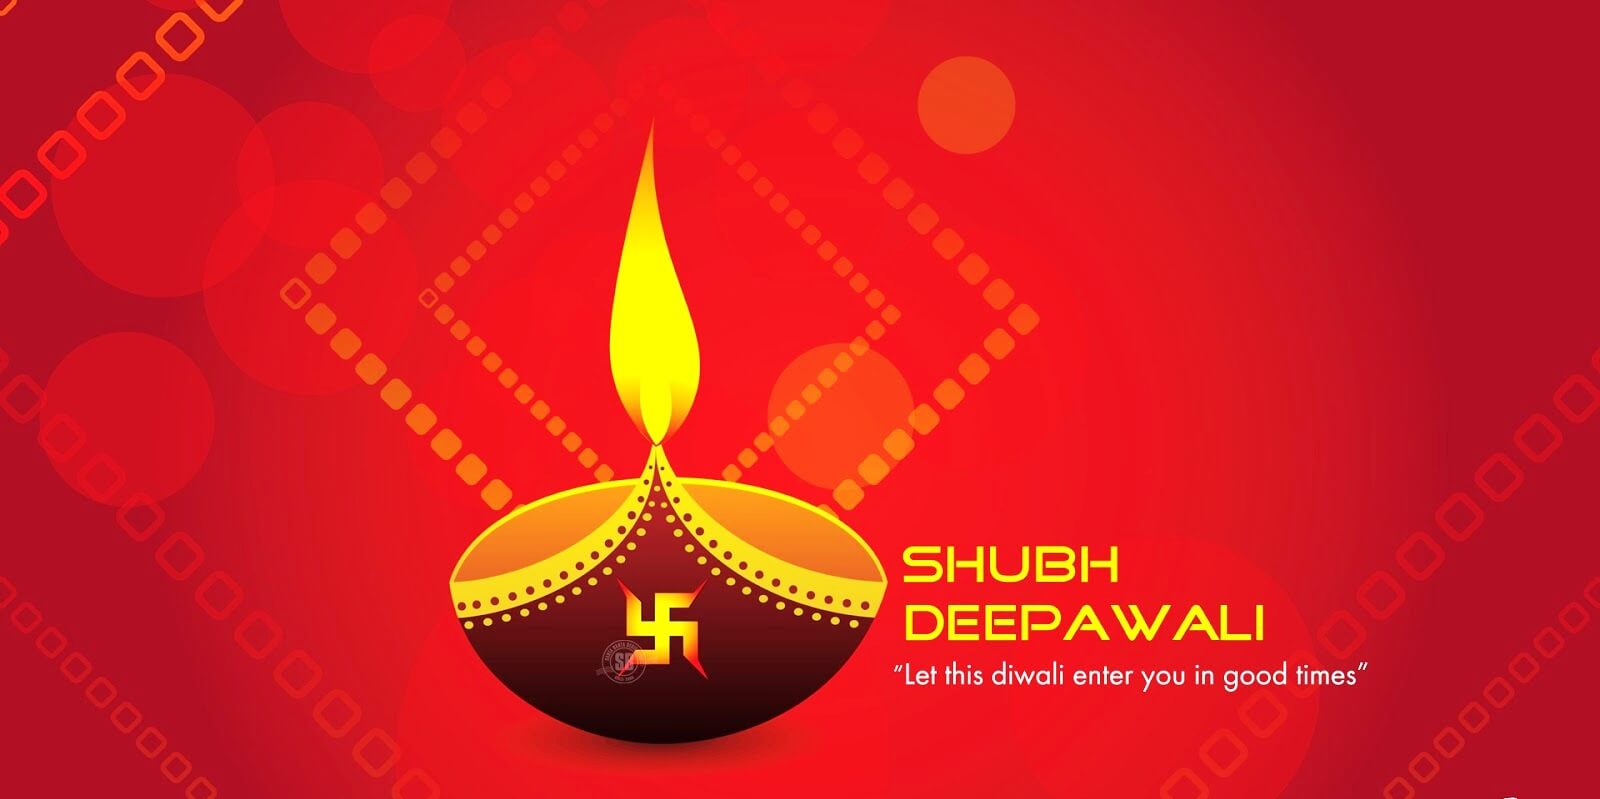 Download-Happy-Diwali-2015-HD-Wallpapers-facebook-mobile-desktop-cgfrog-4